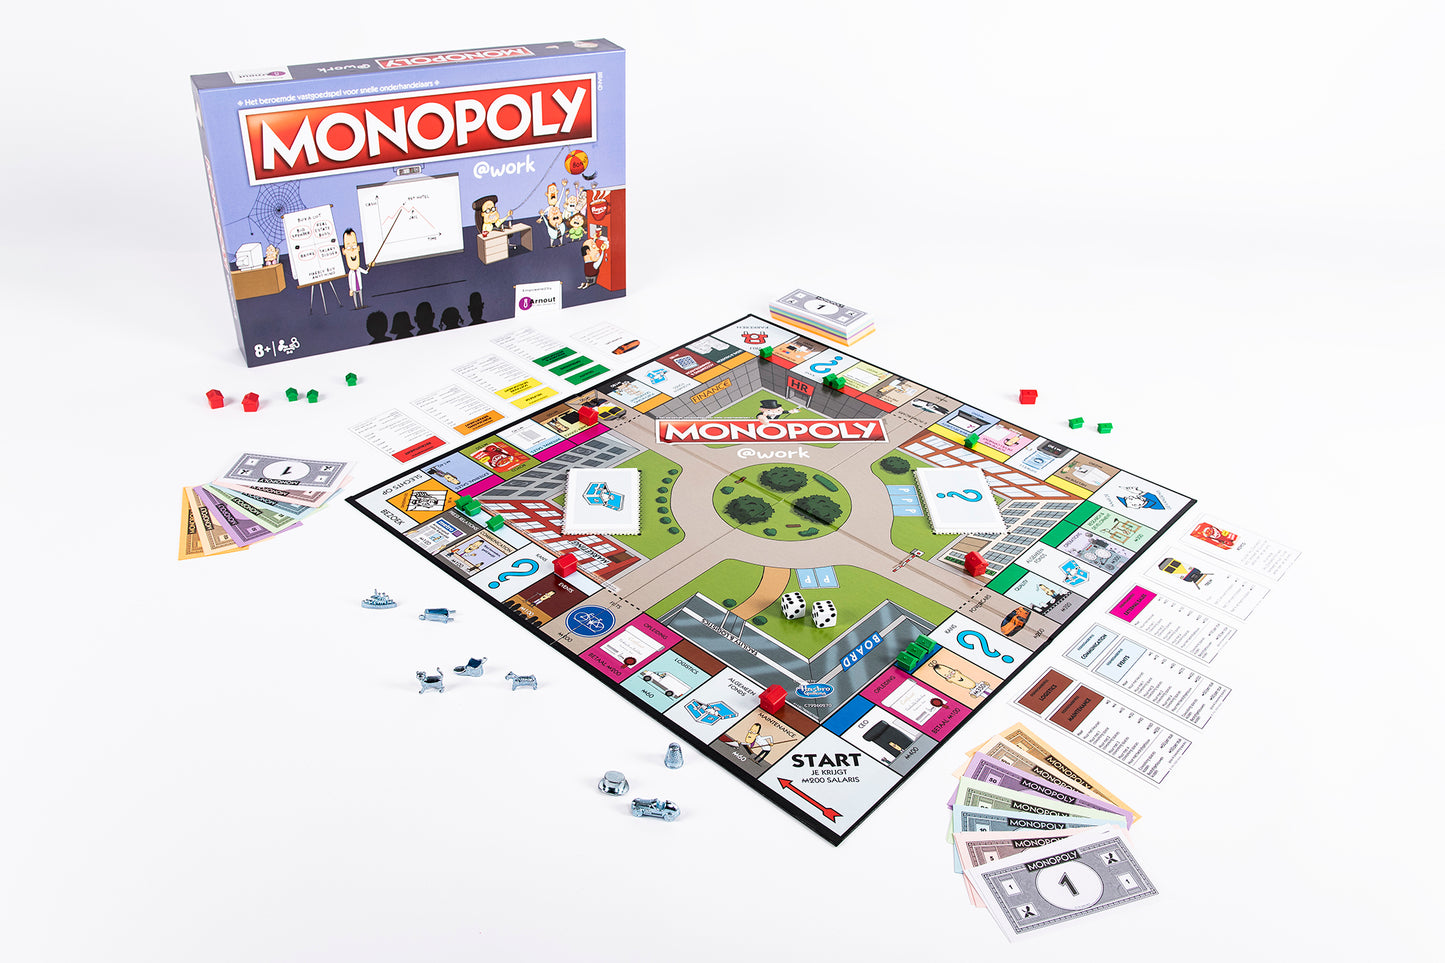 Monopoly @Work